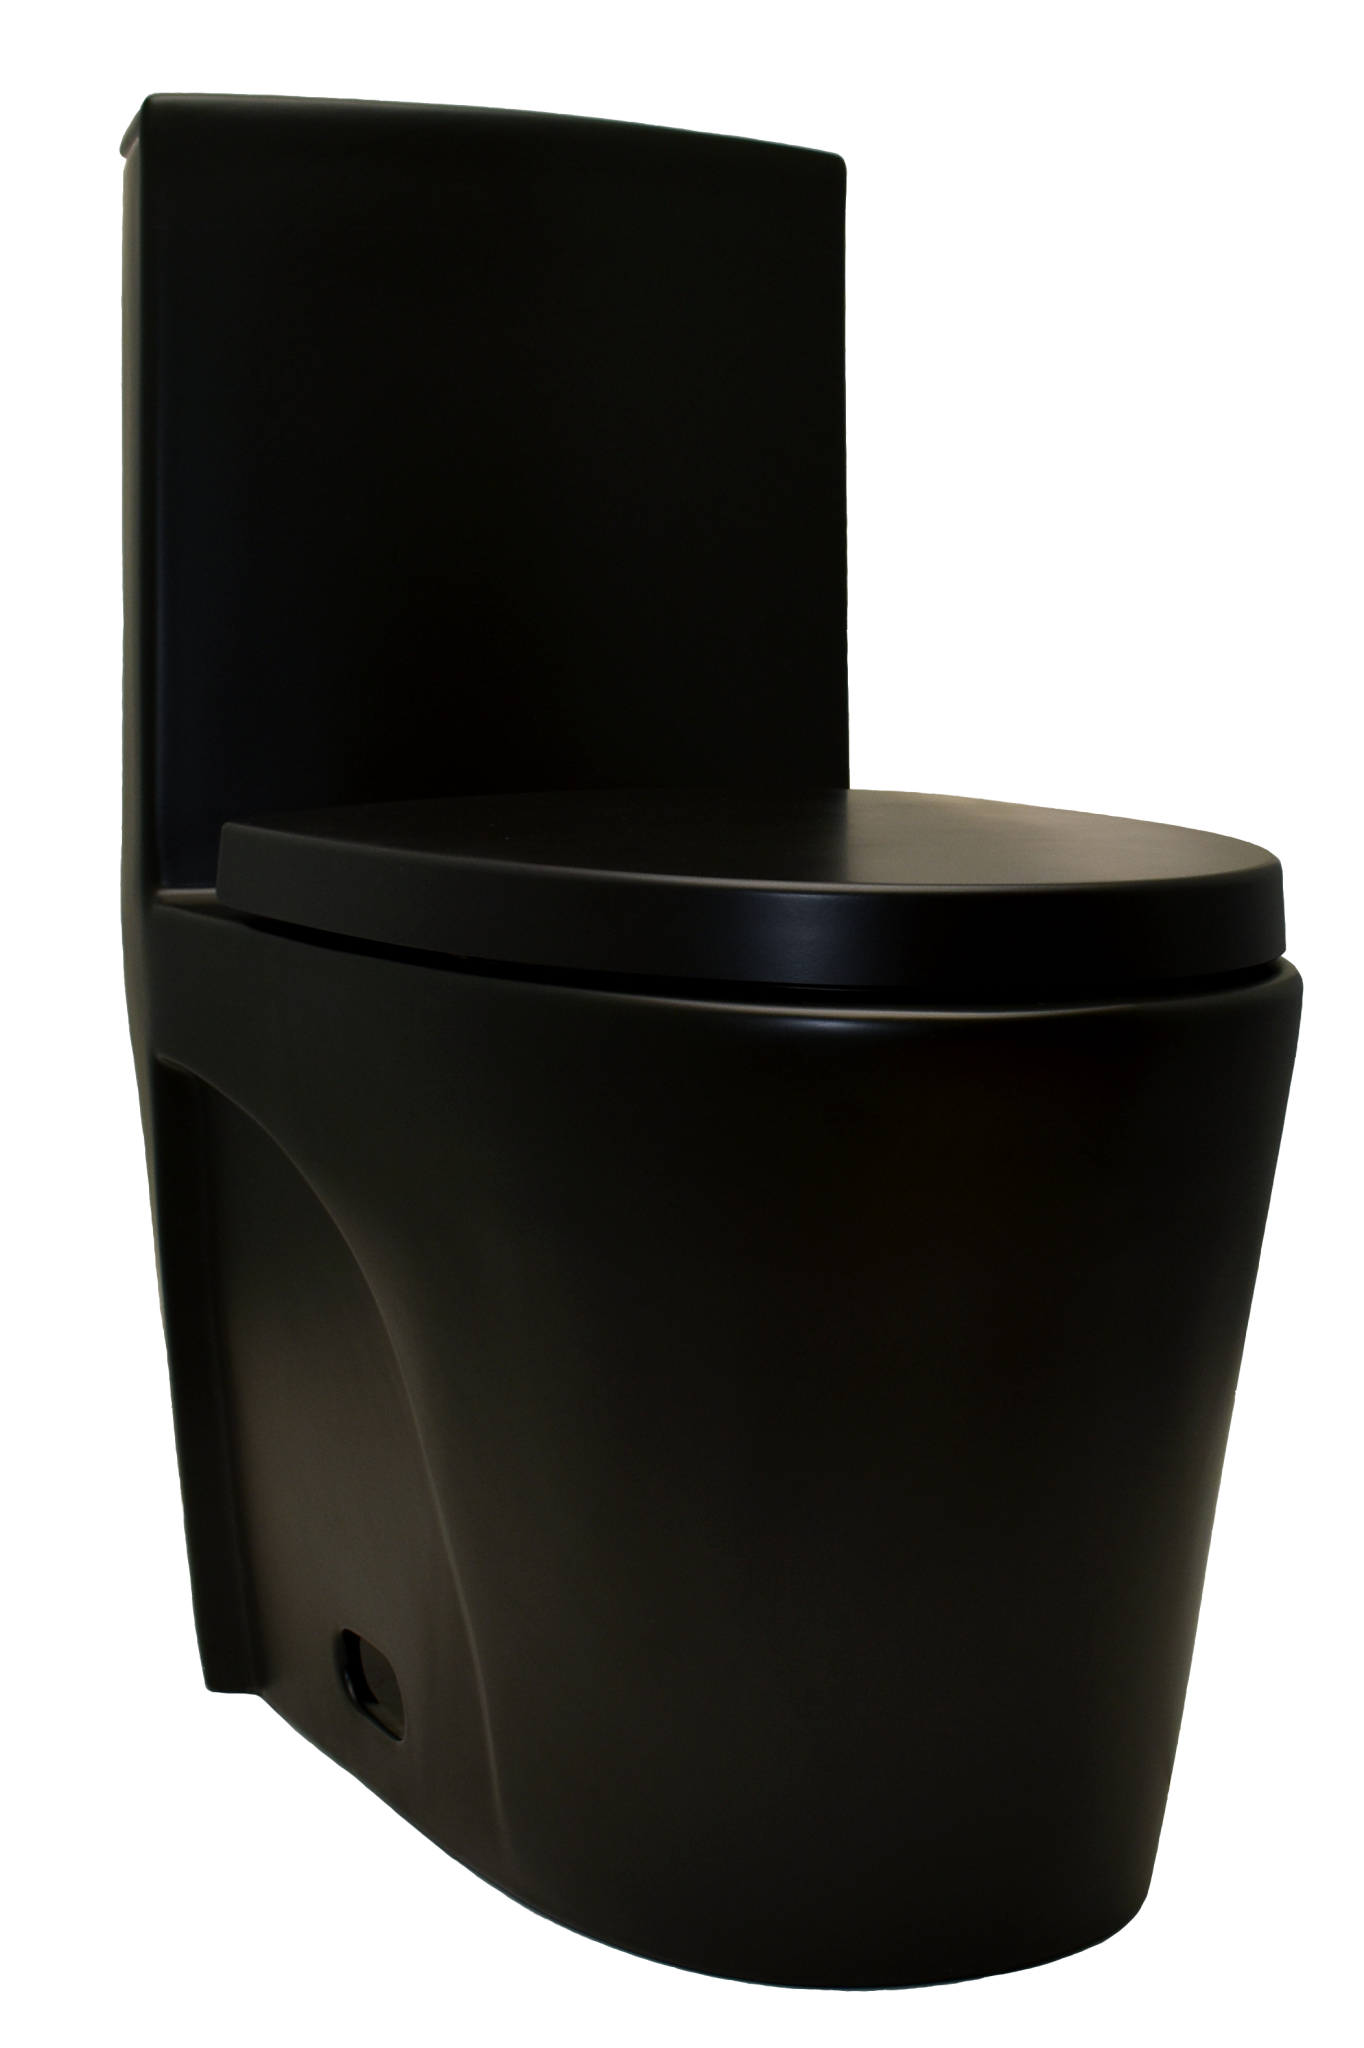 Black Toilet Seat PNG HD Quality